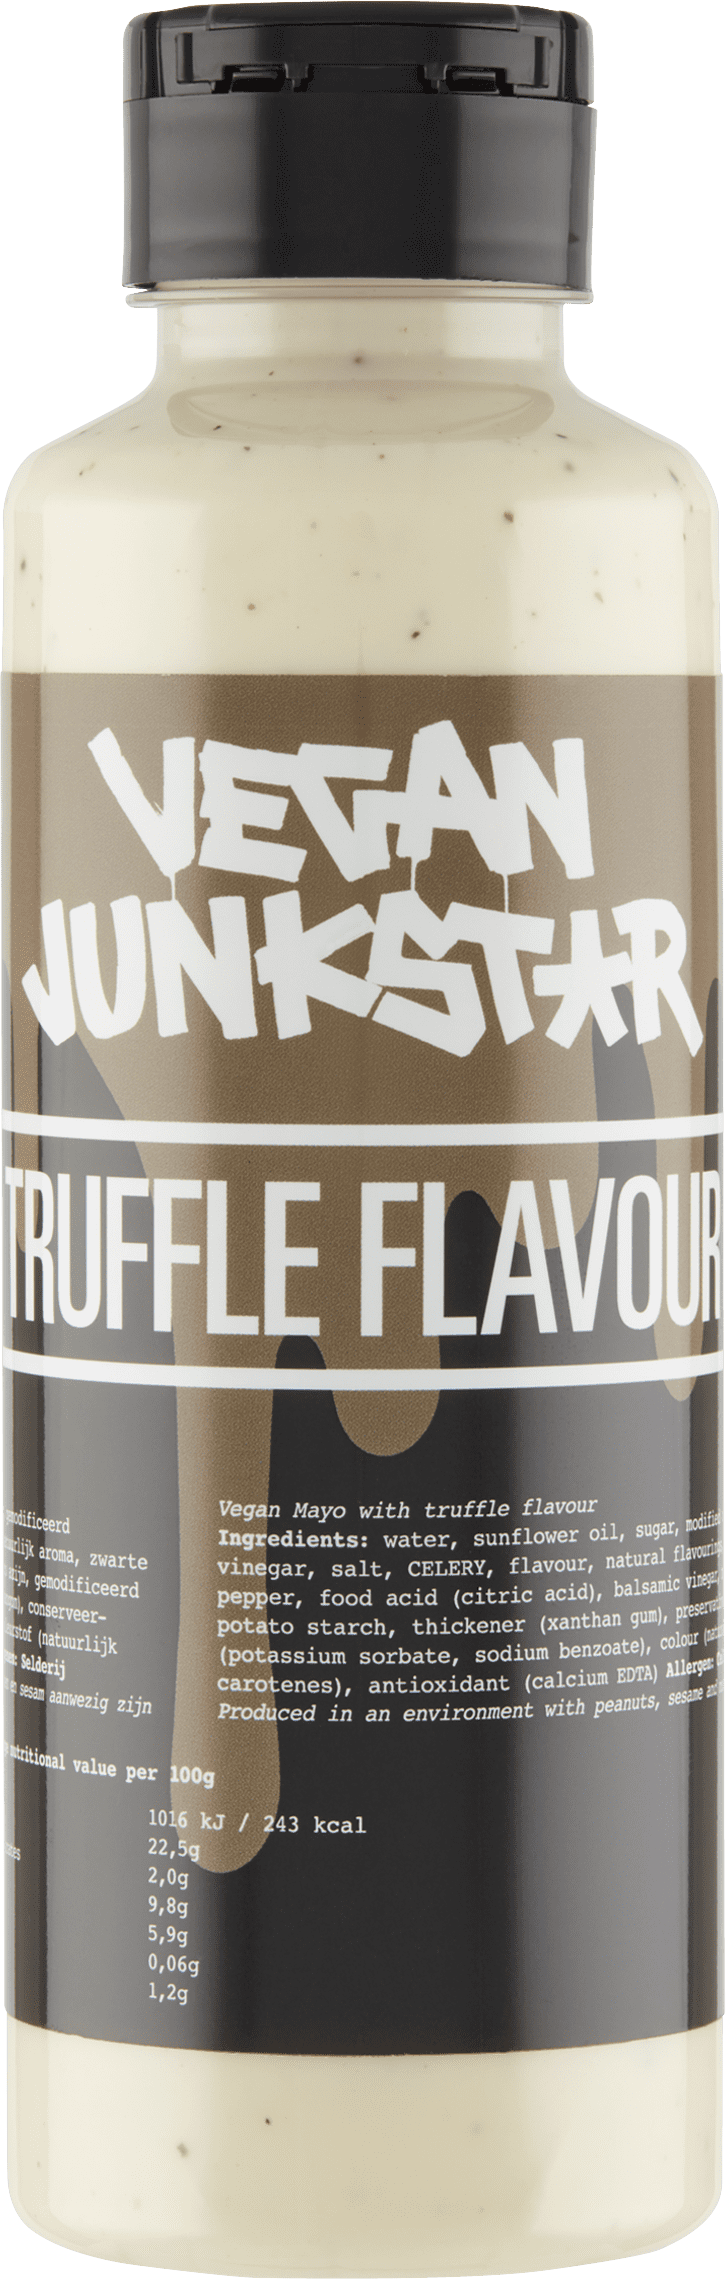 Vegan Junkstar | Truffle Flavour